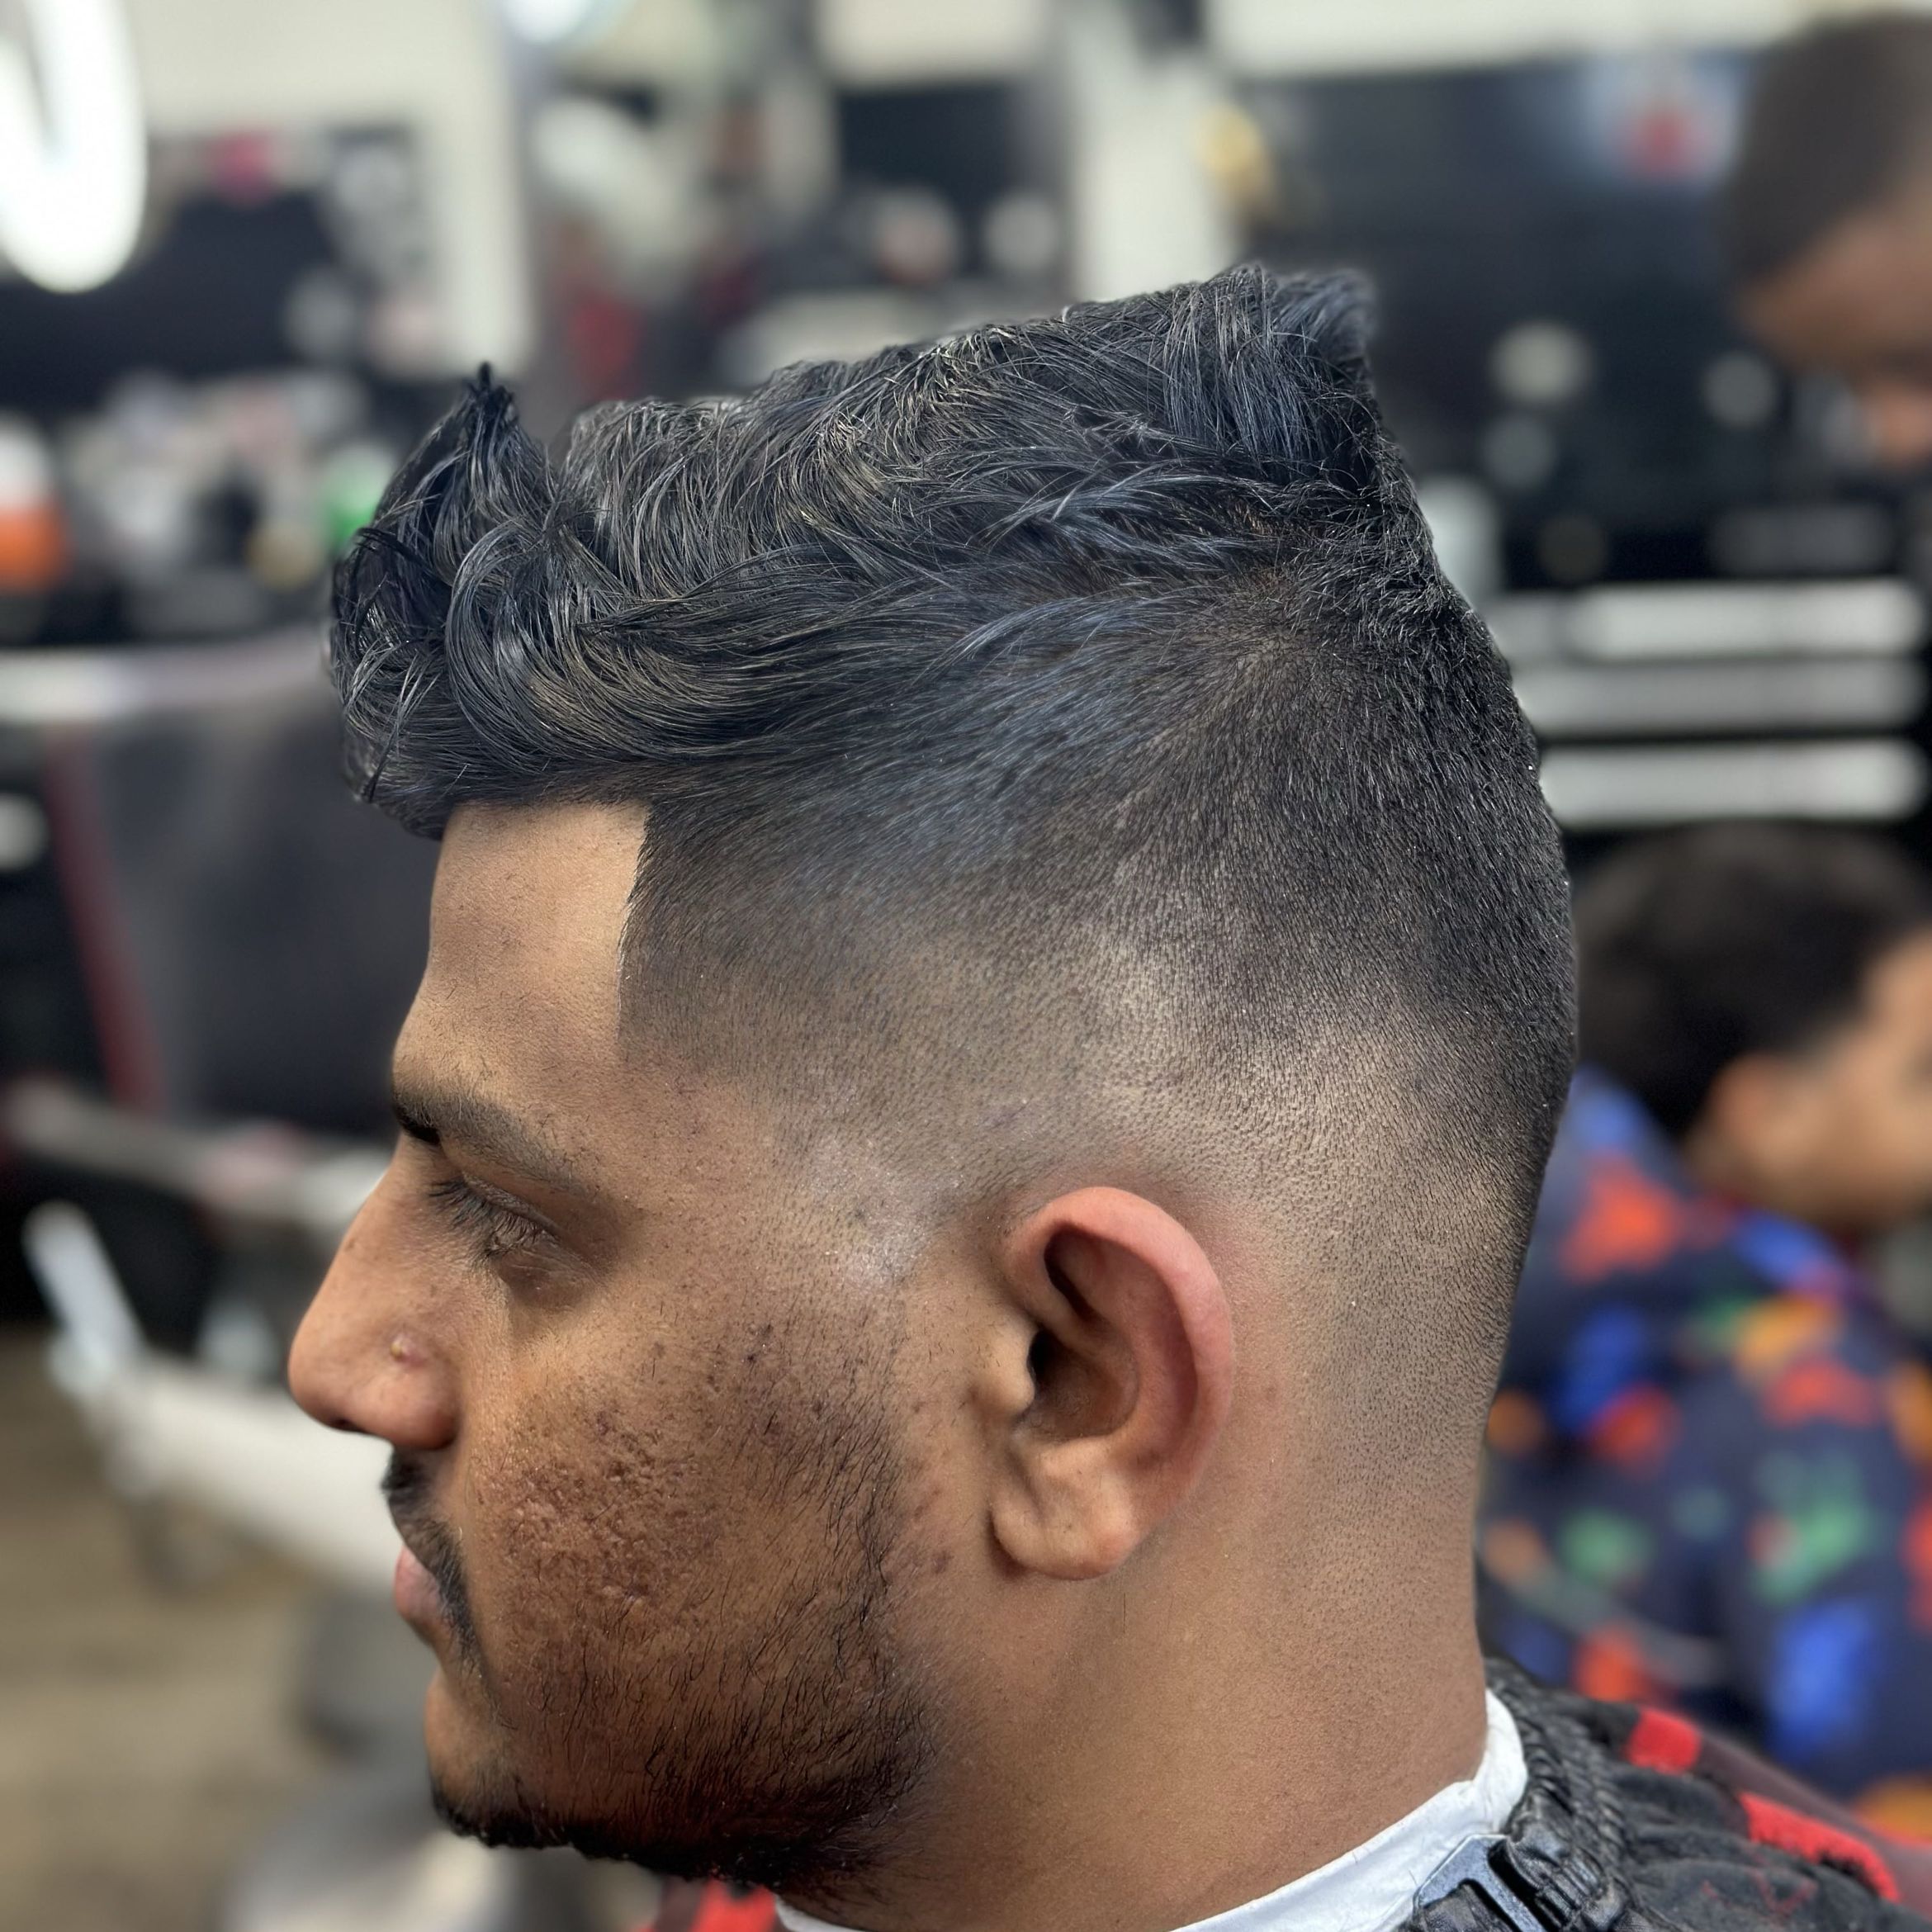 Men’s Haircut (Adult) portfolio